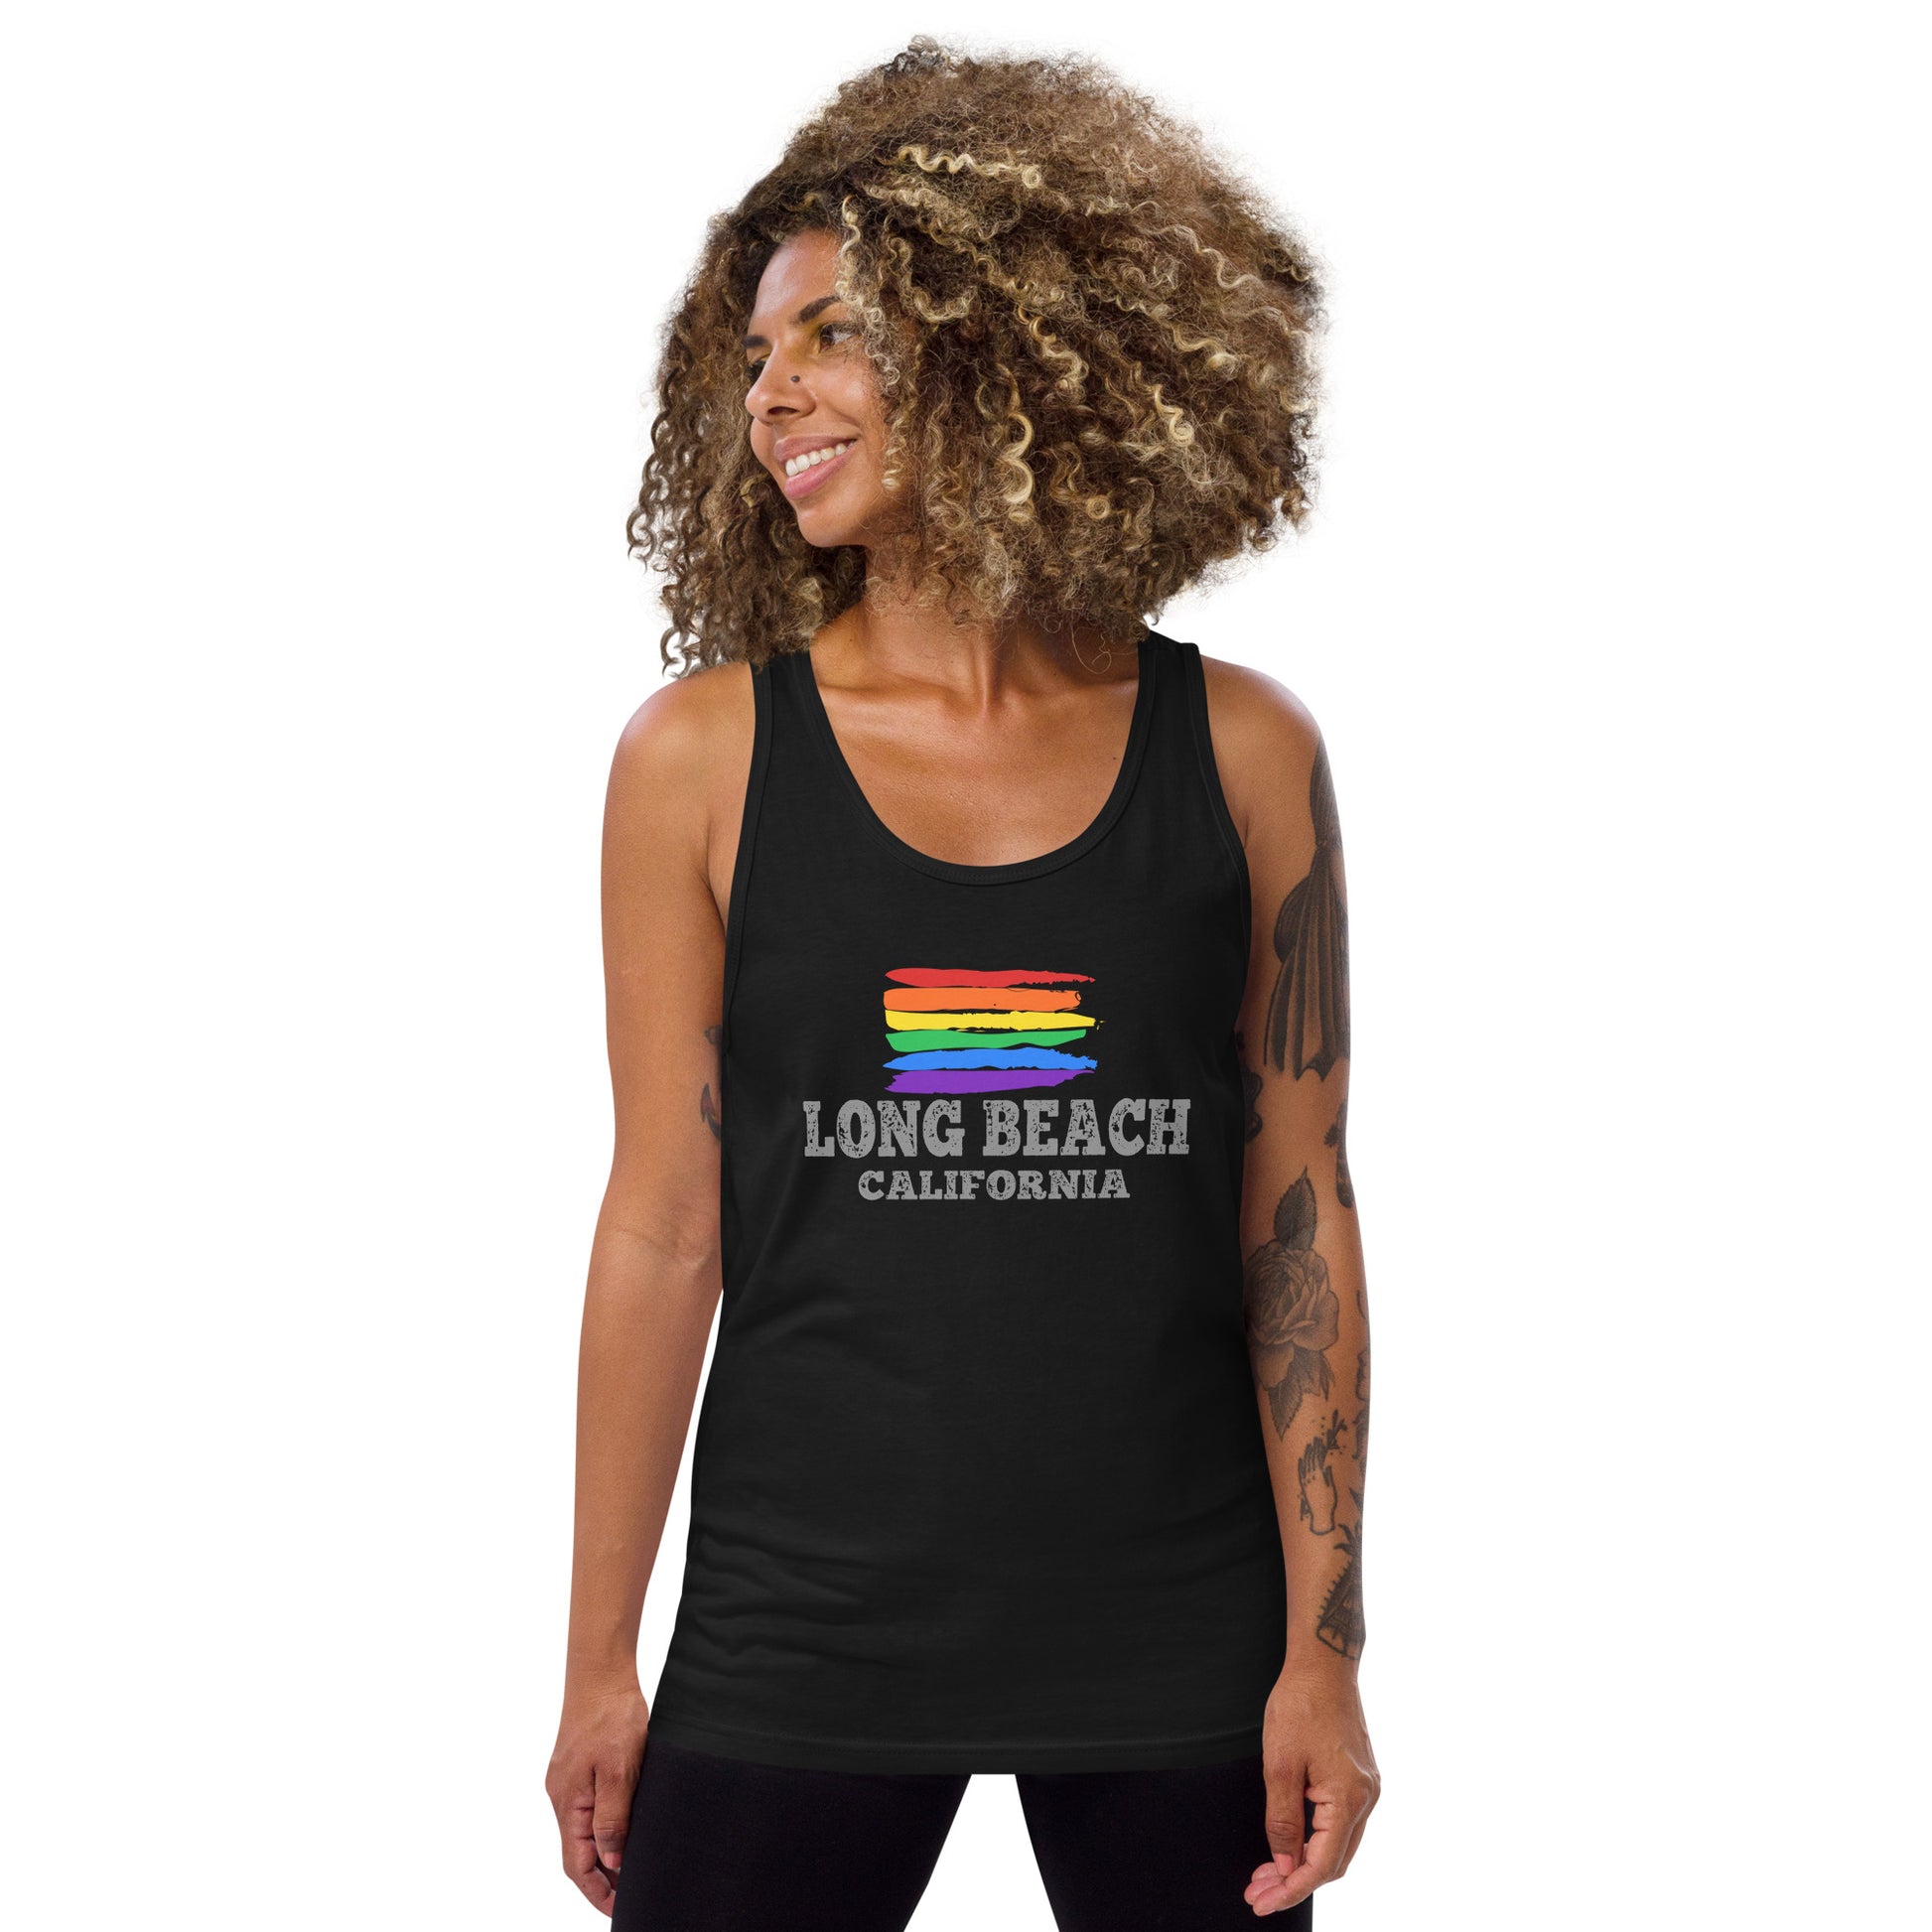 Long Beach California LGBTQ+ Gay Pride Tank Top - gay pride apparel